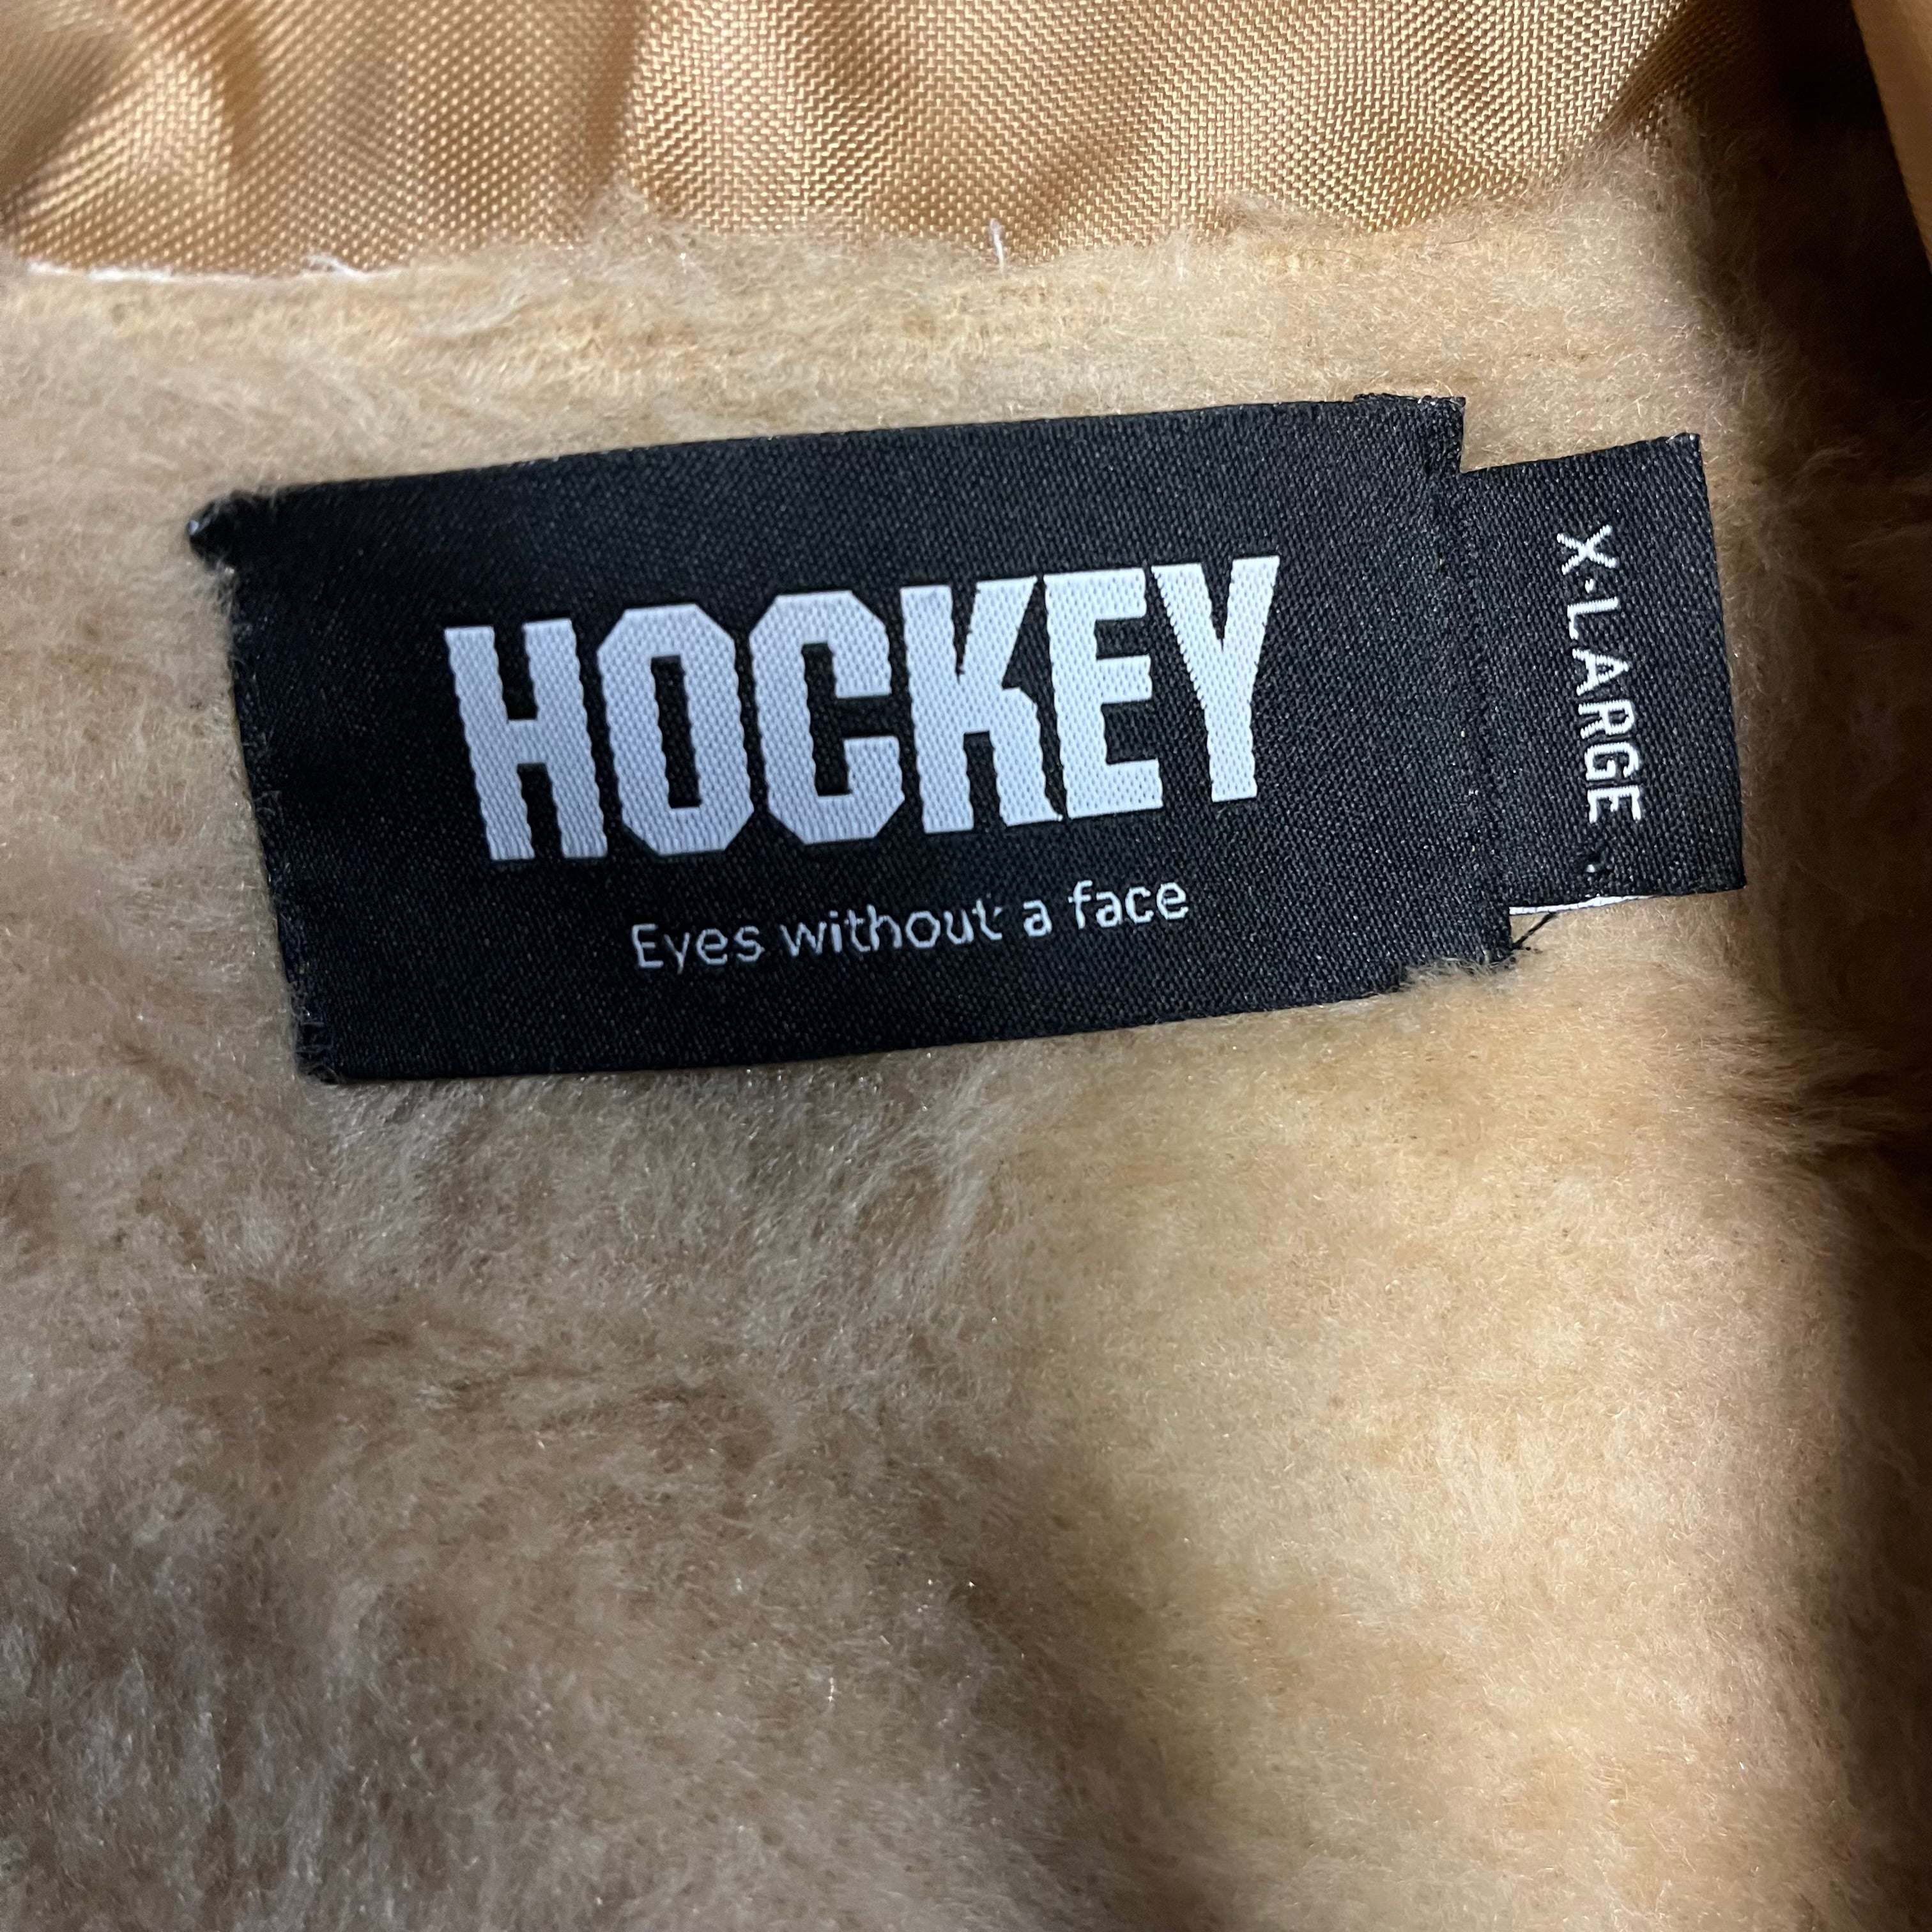 Hockey Fur Lined Jacket